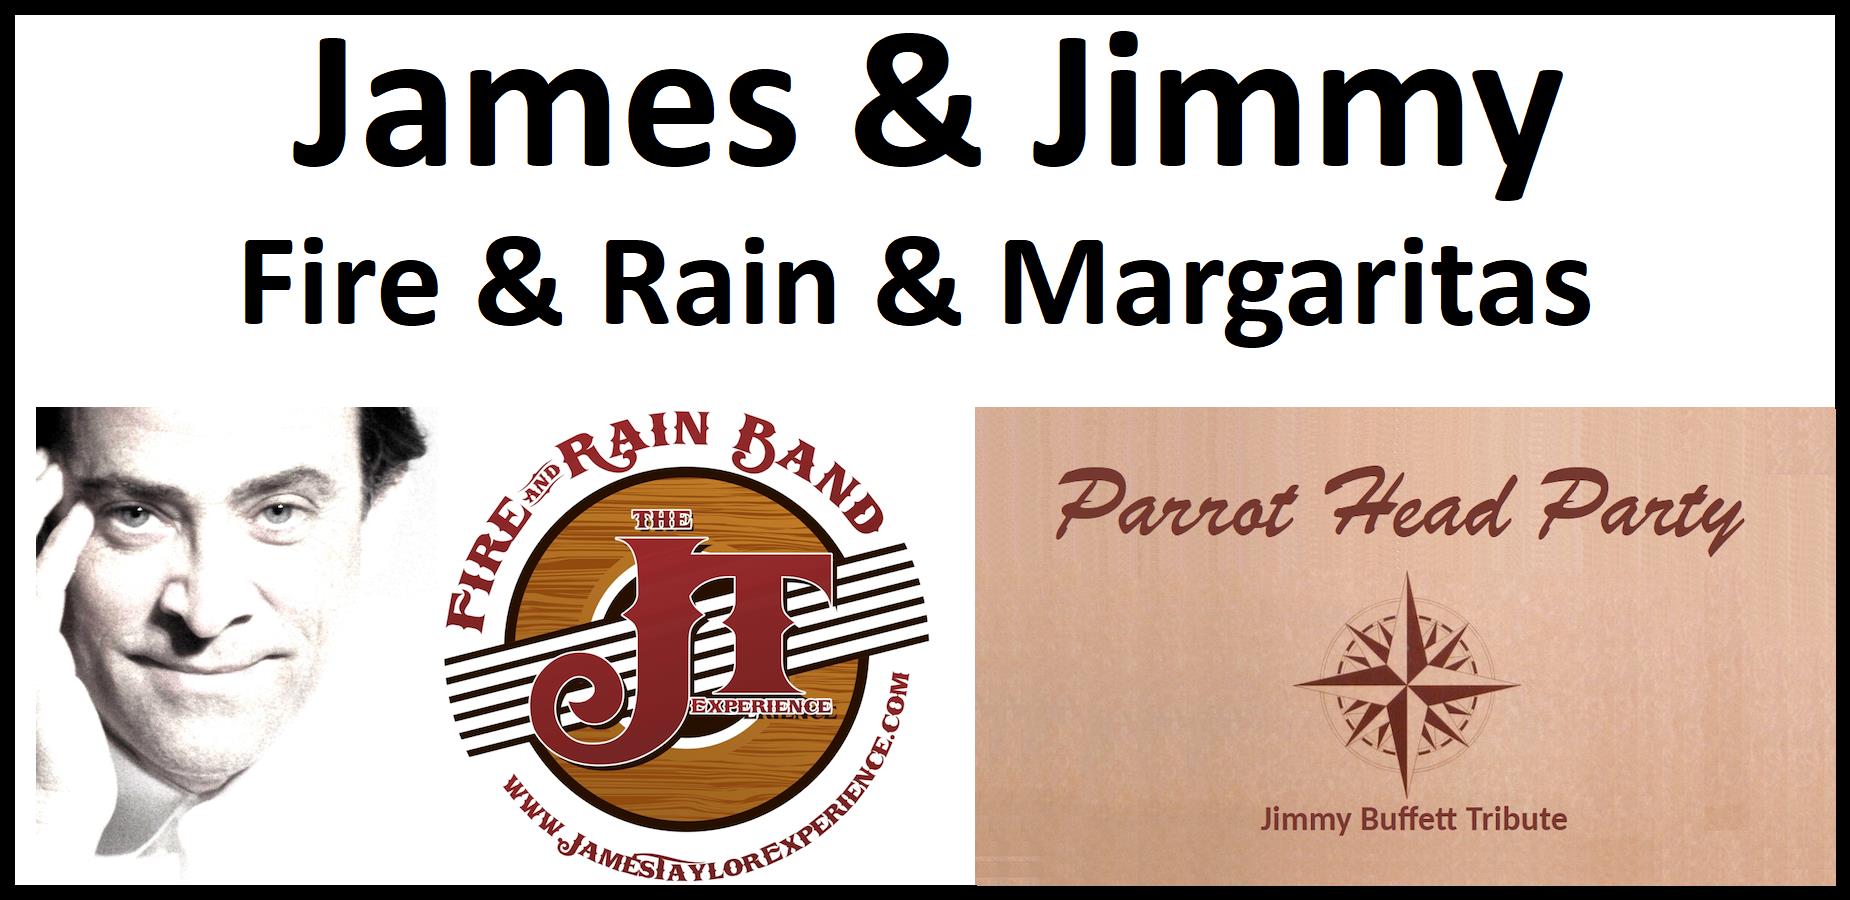 The James & Jimmy Show: Fire & Rain & Margaritas!